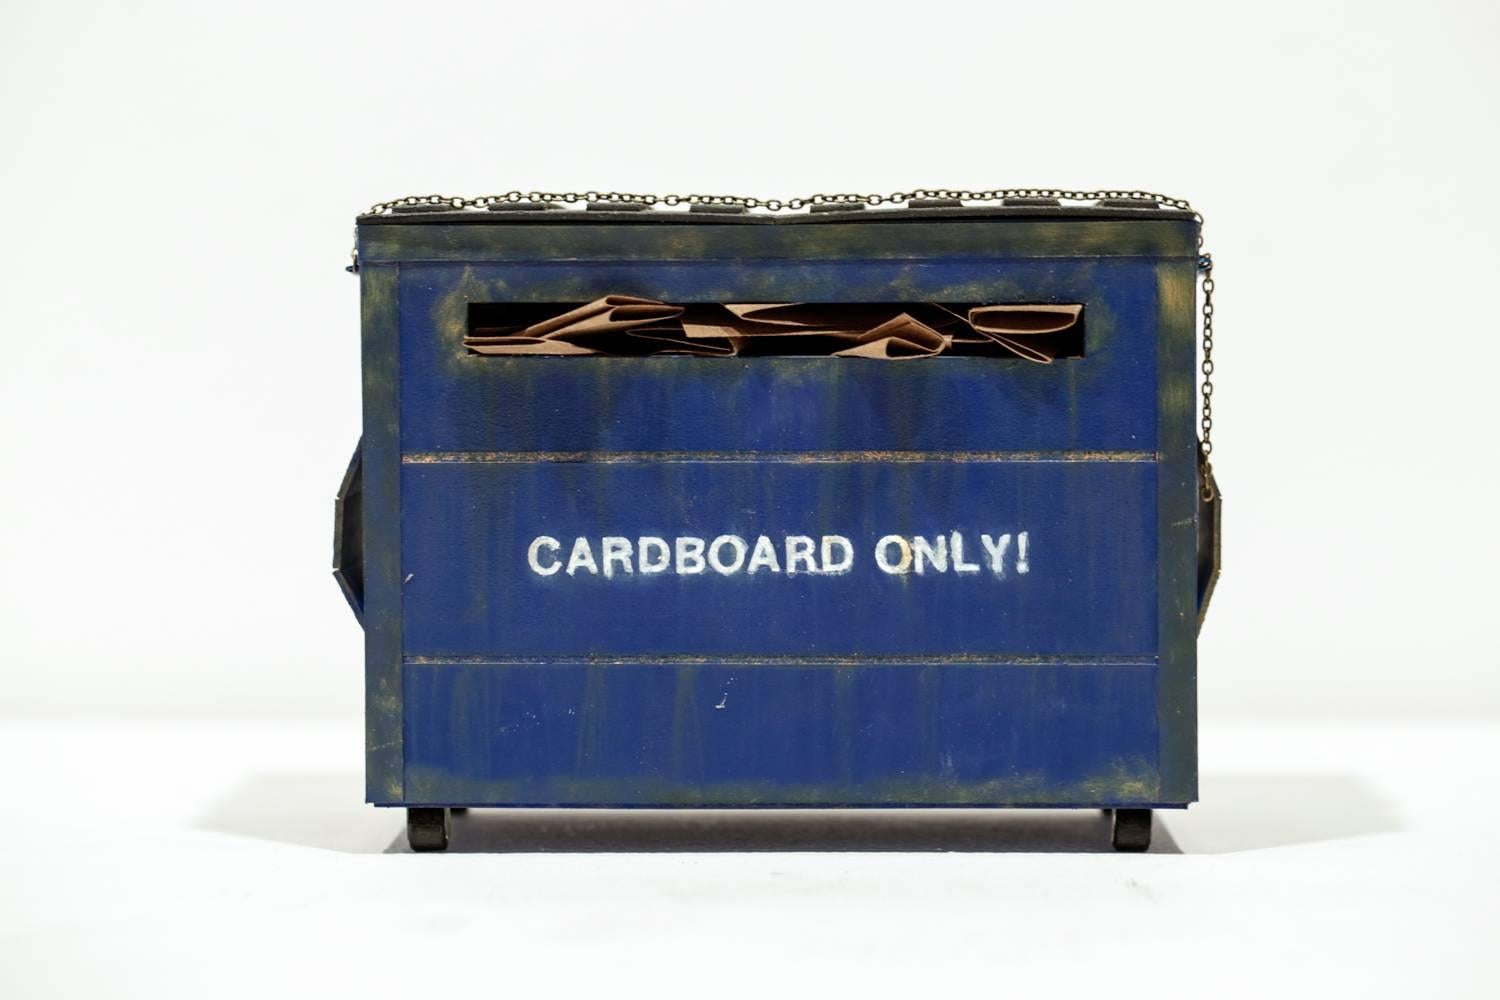 Cardboard Only Dumpster - Sculpture by Drew Leshko